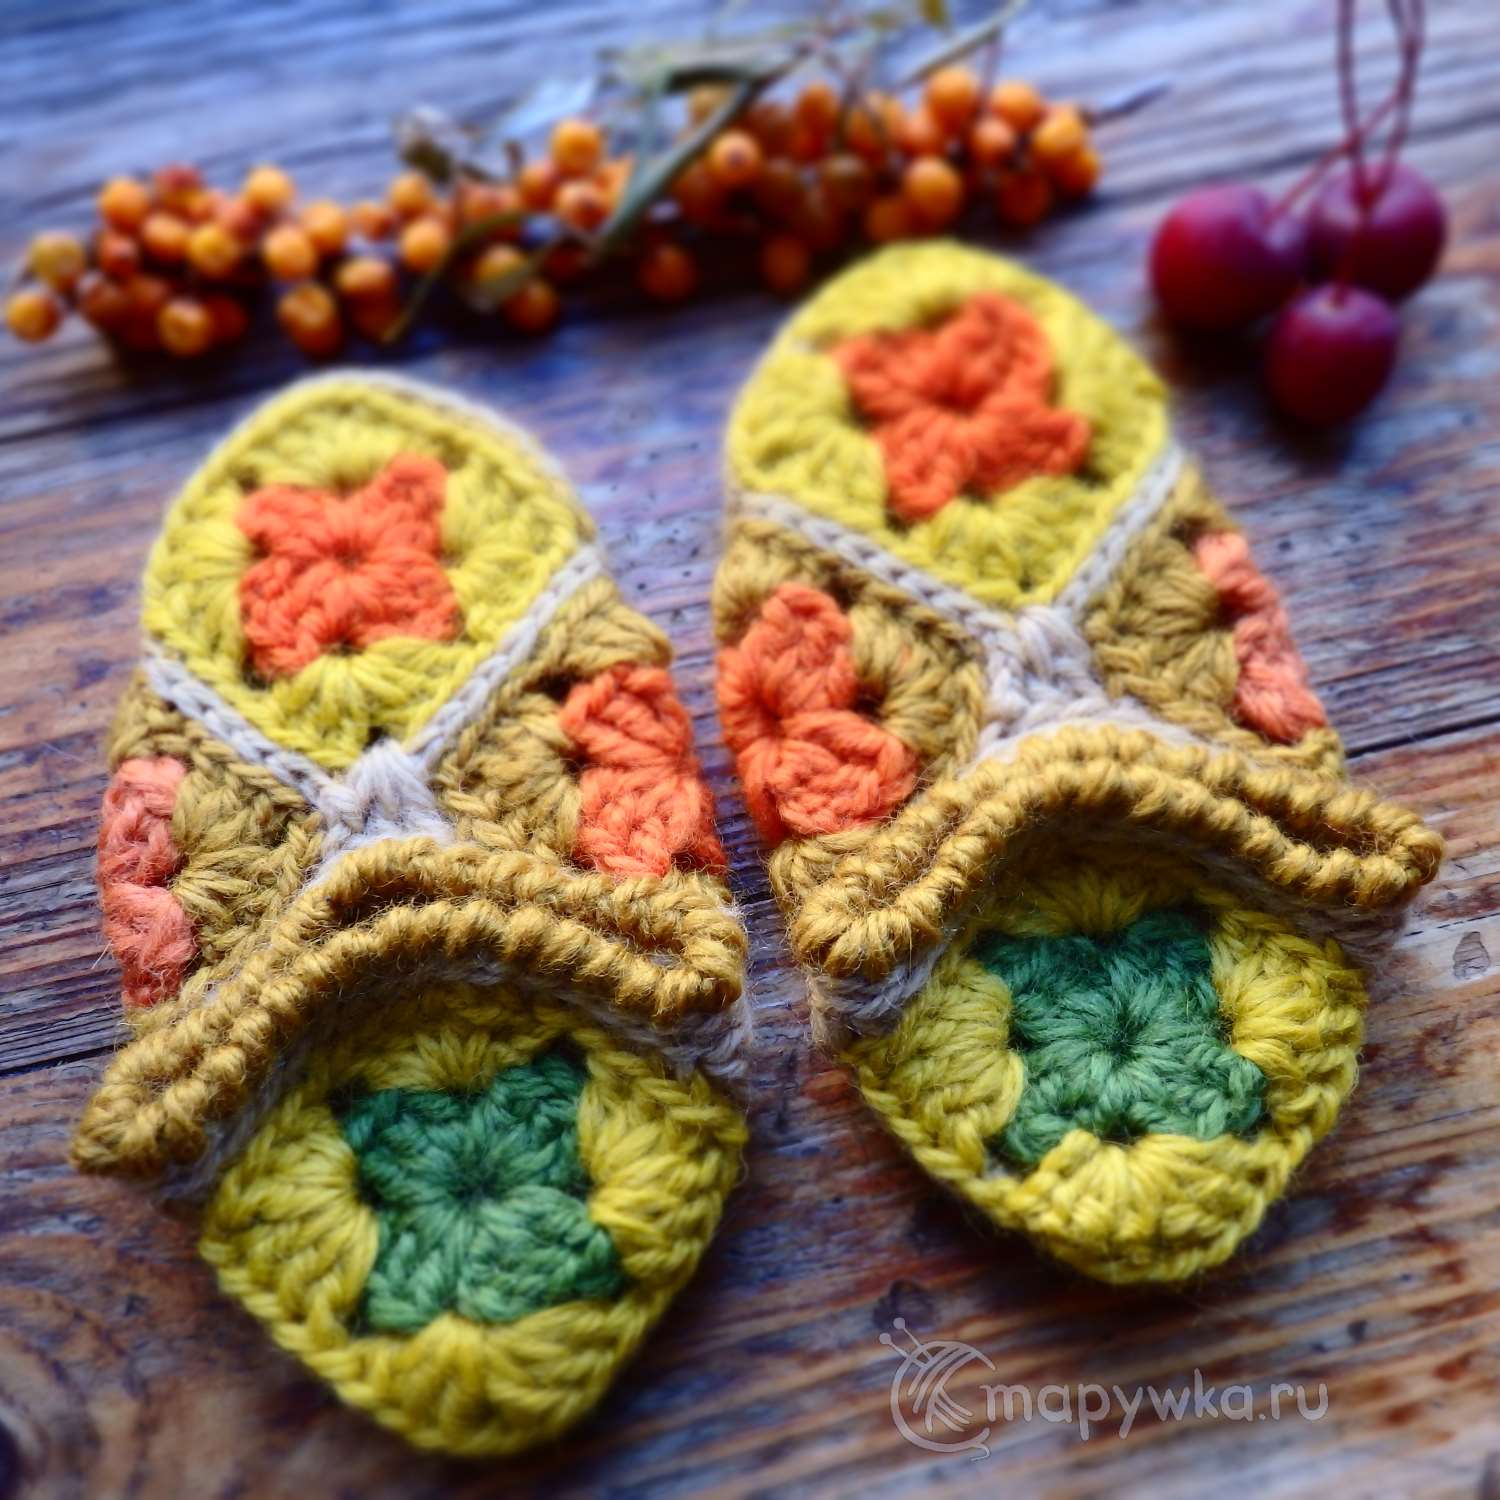 Ремонт и обустройство: hand crochet lace